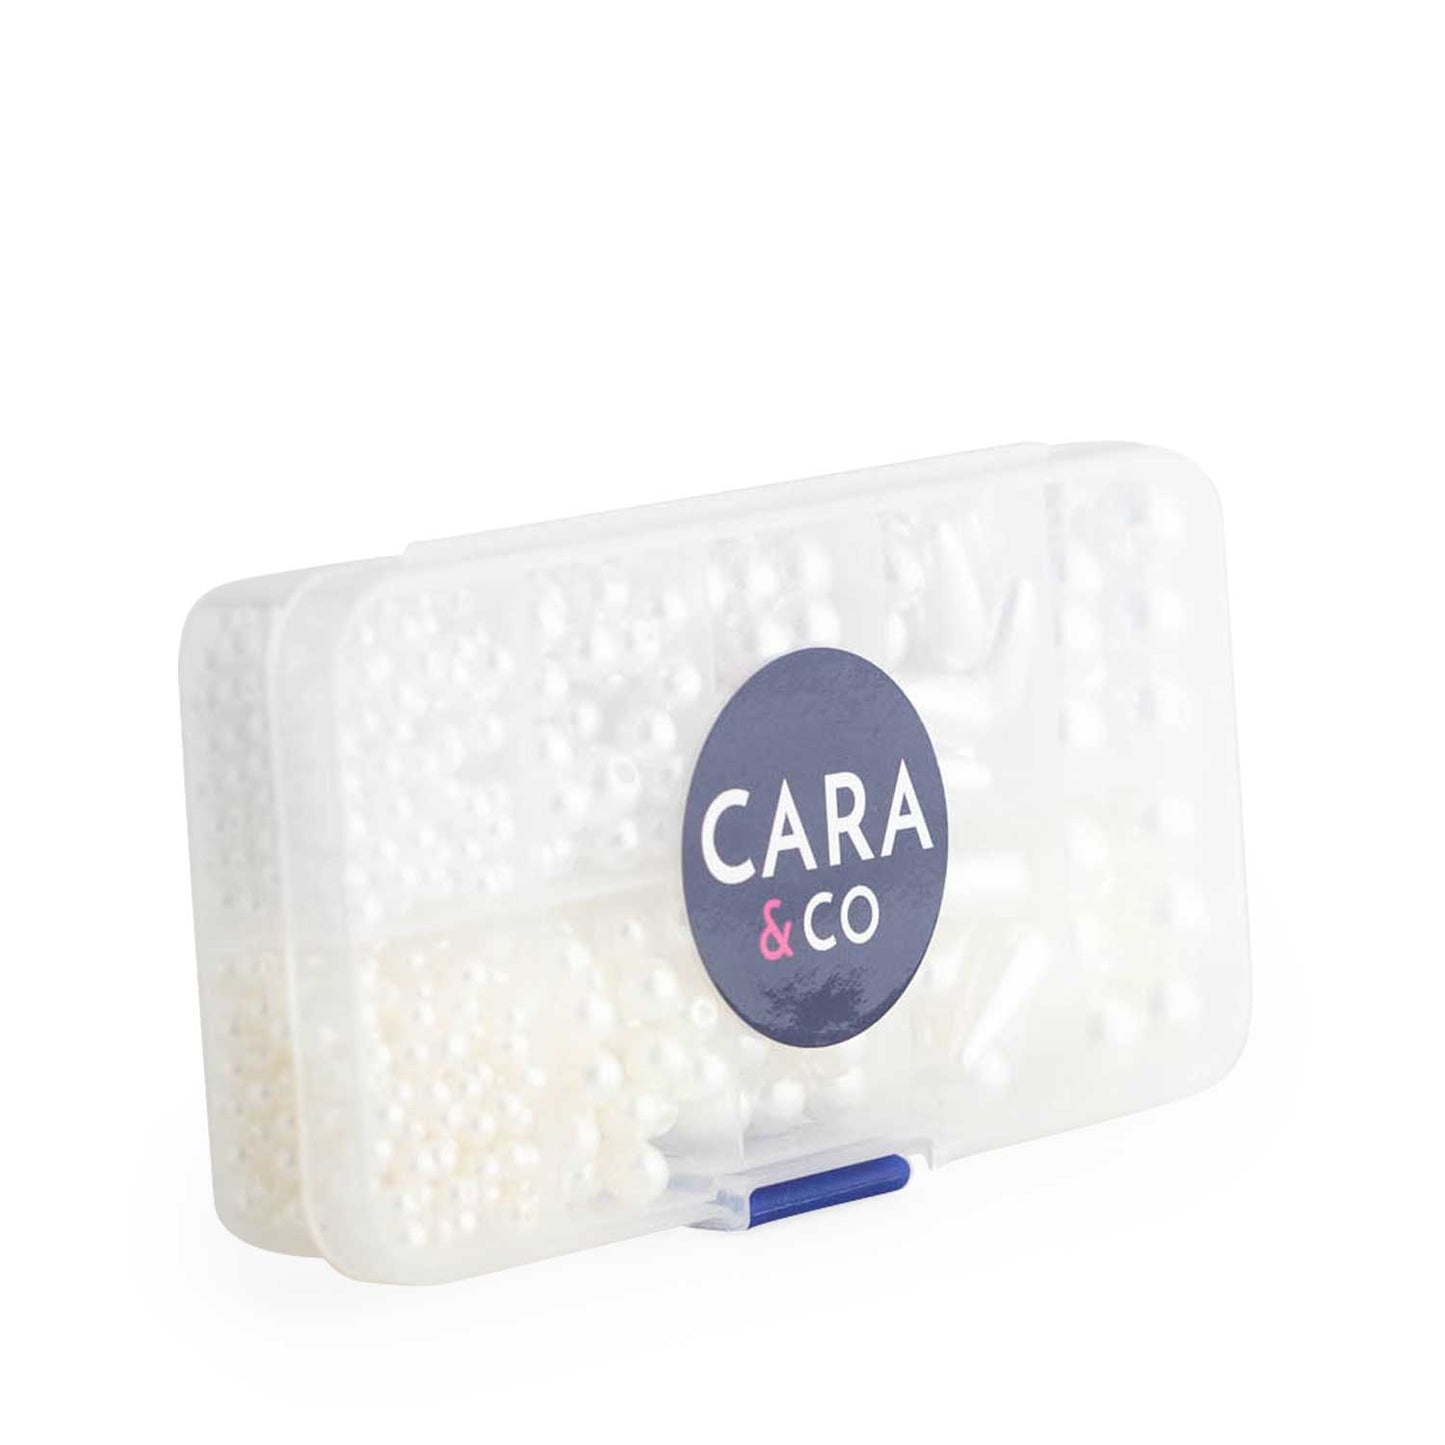 Acrylic Craft Kits Mixed Pearl from Cara & Co Craft Supply